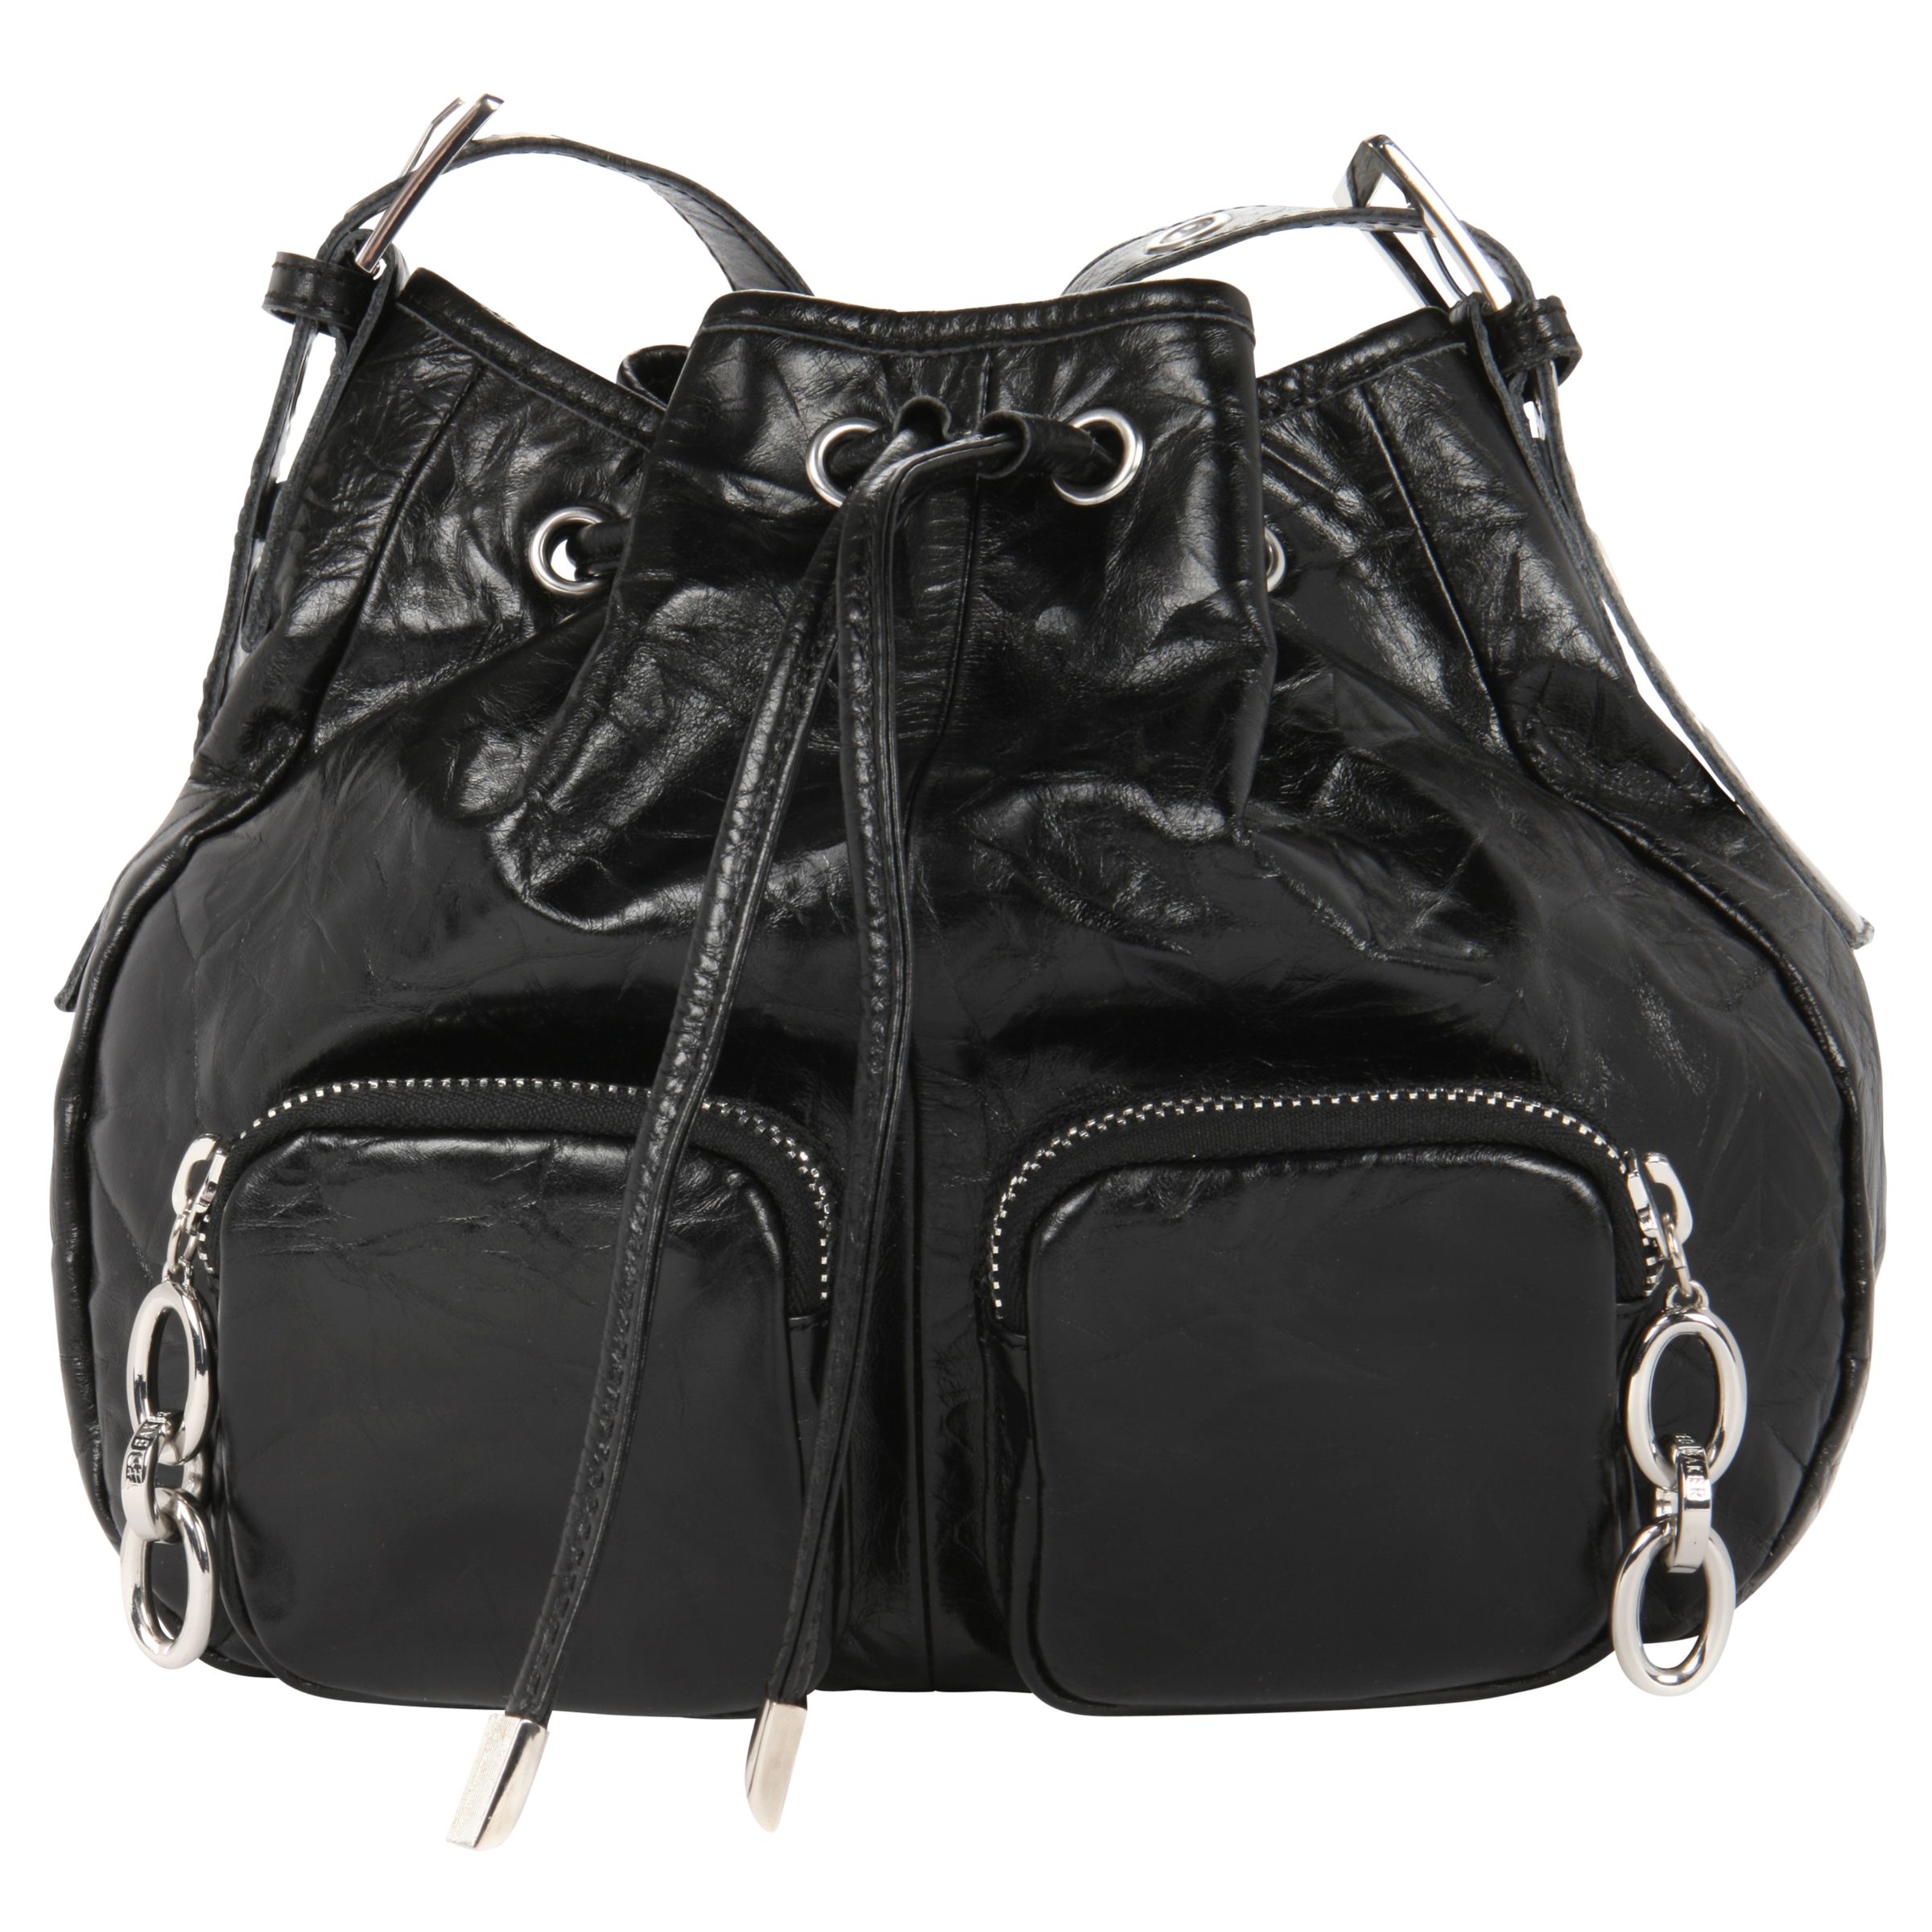 Ted Baker Indie Drawstring Leather Handbag, Black at John Lewis